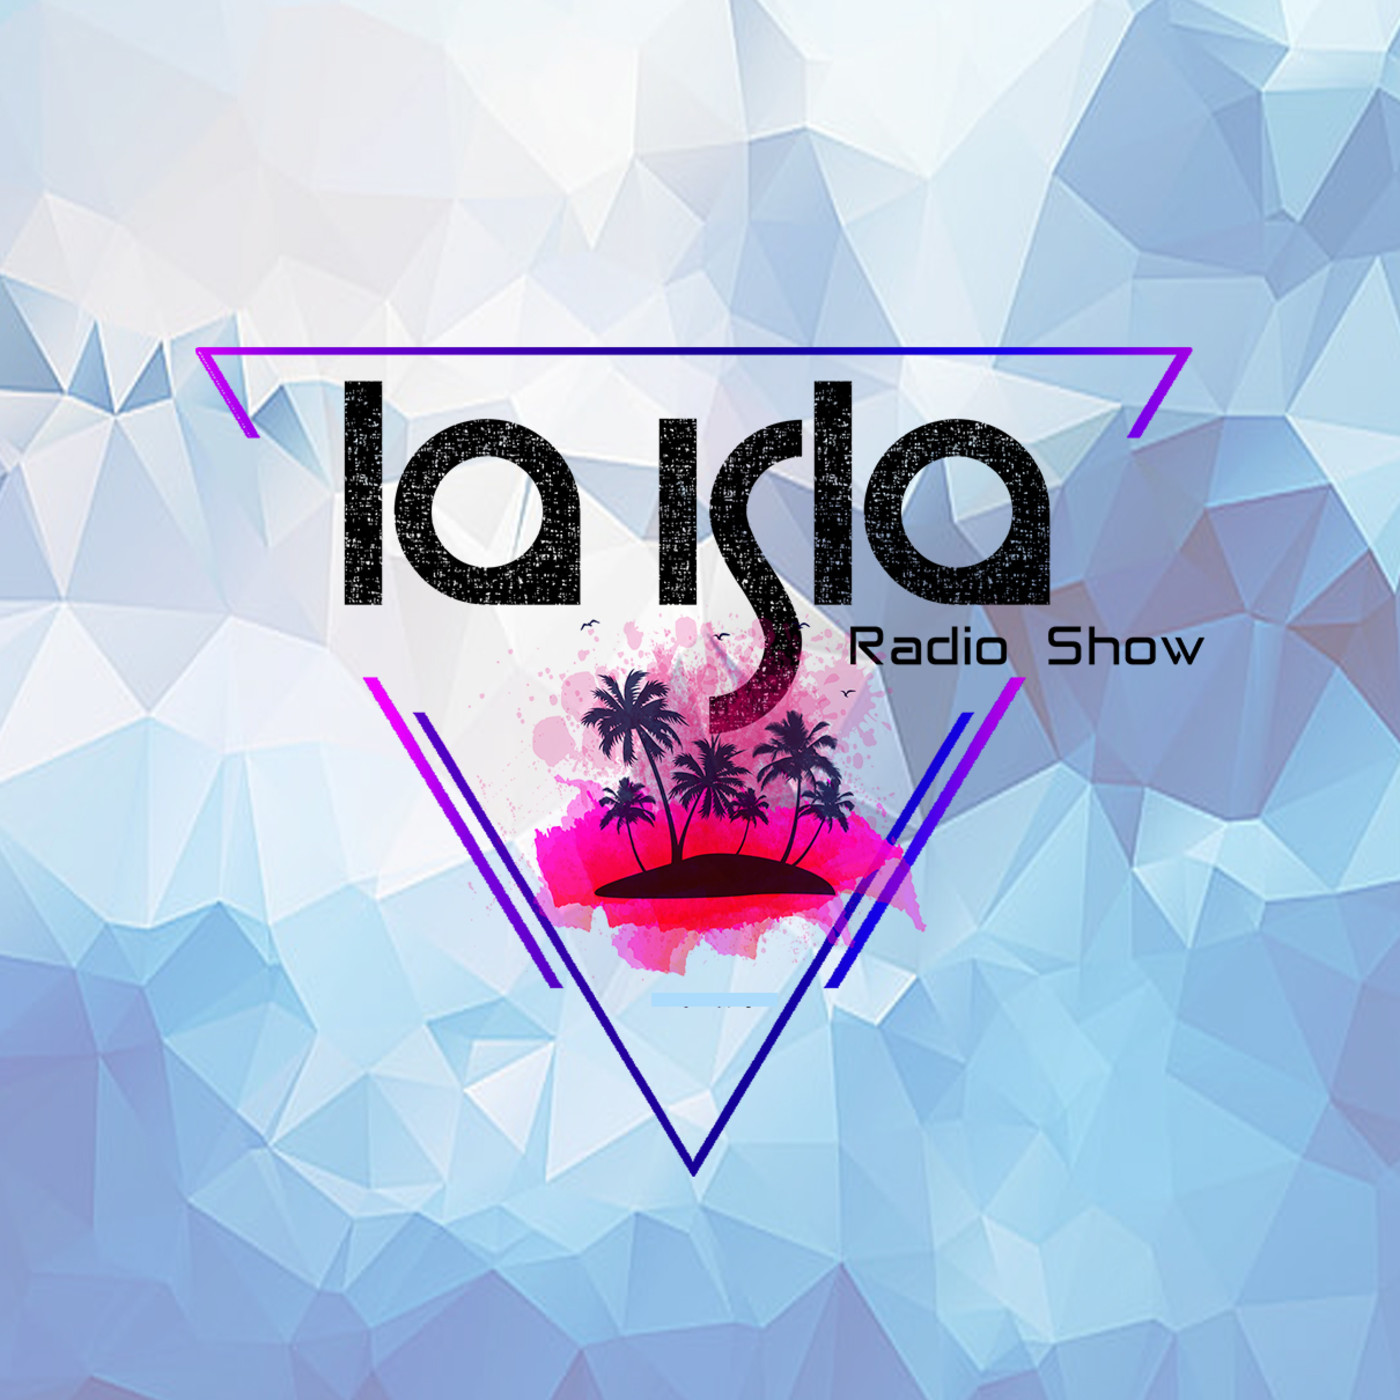 La Isla Radio Show #77 - 16/09/21 / OSCAR PIAGGIO